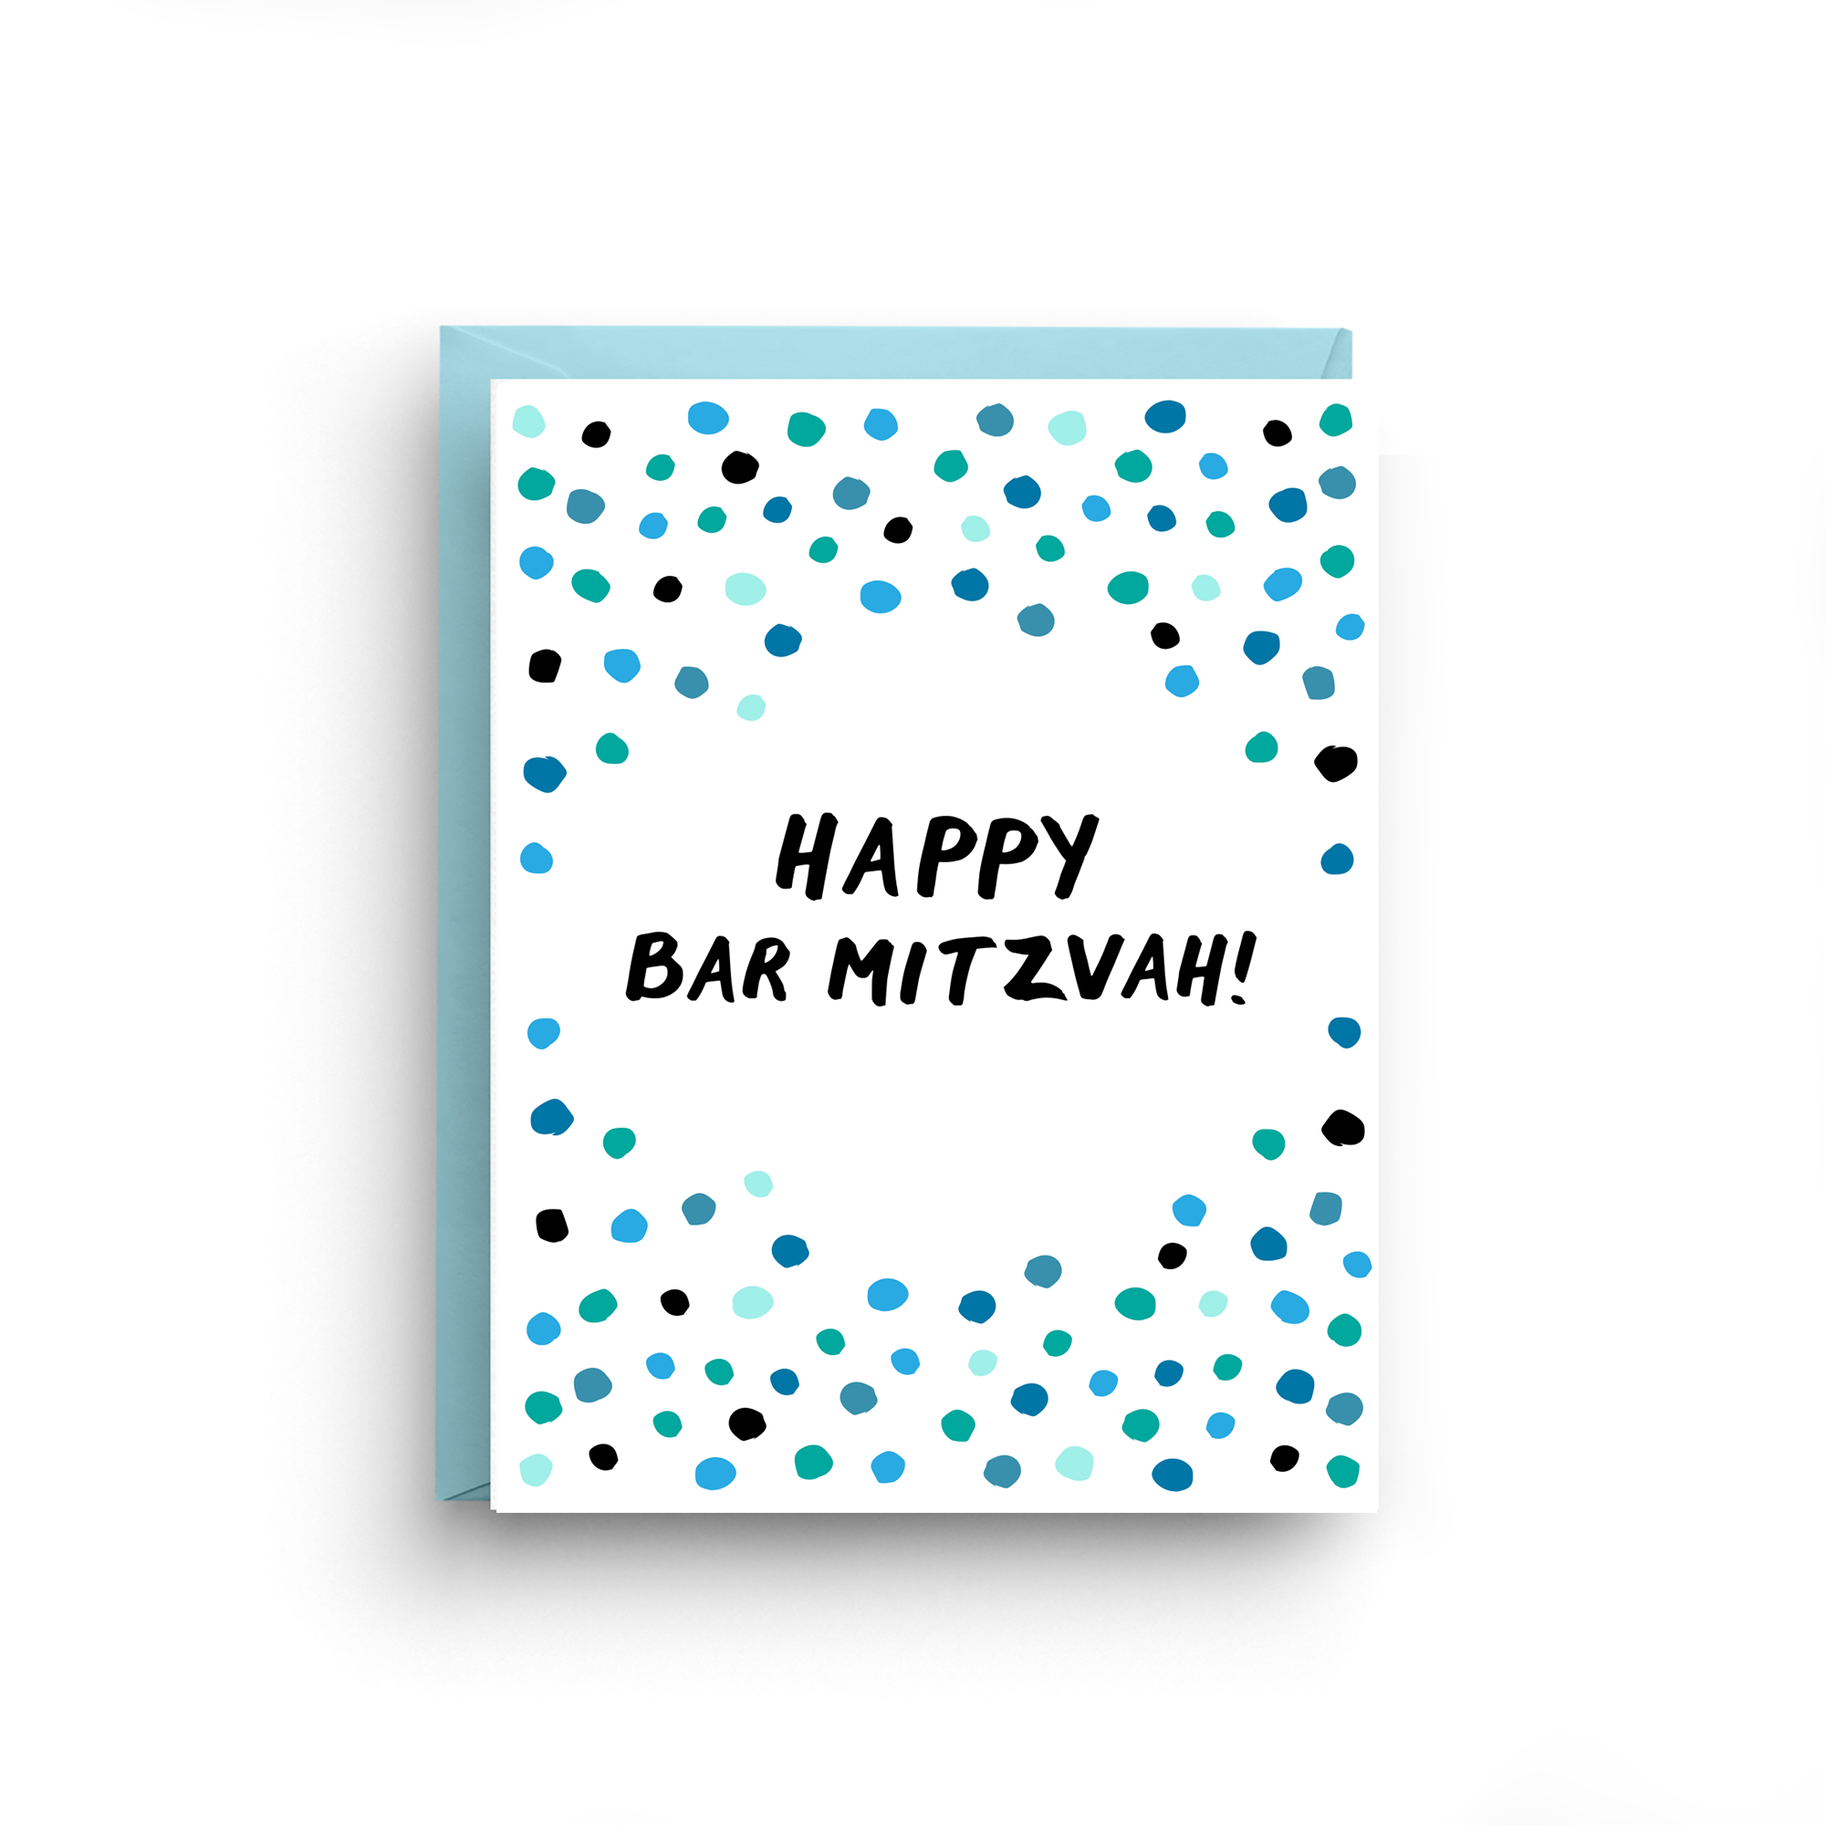 Happy Bar Mitzvah! - Greeting Card - Mellow Monkey